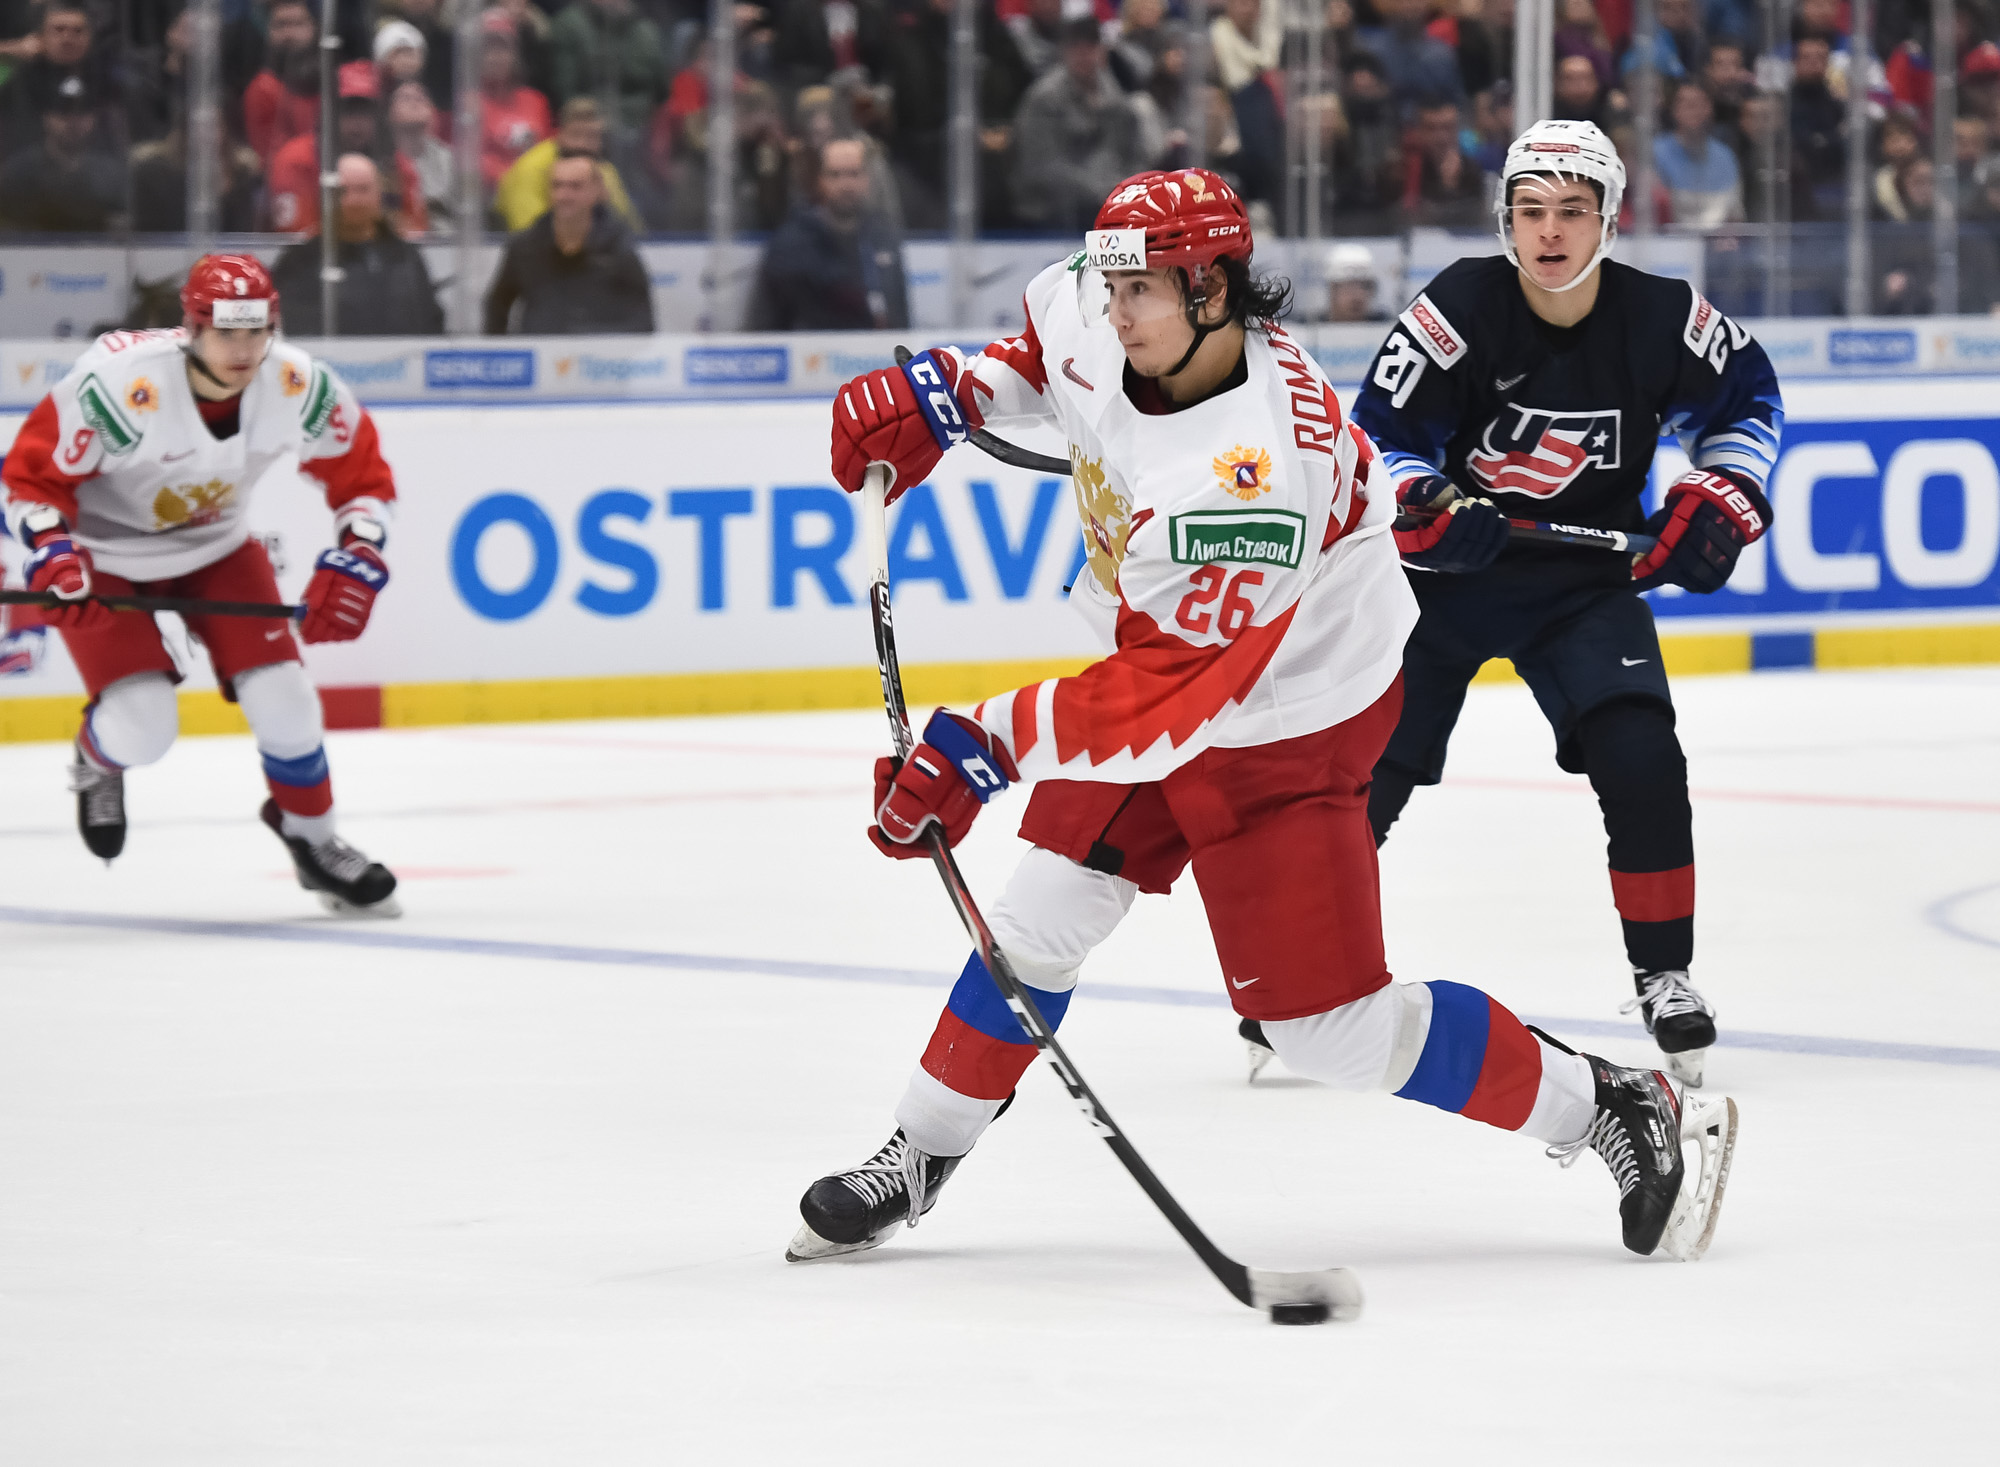 IIHF - Gallery: USA vs. Russia - 2020 IIHF World Junior Championship